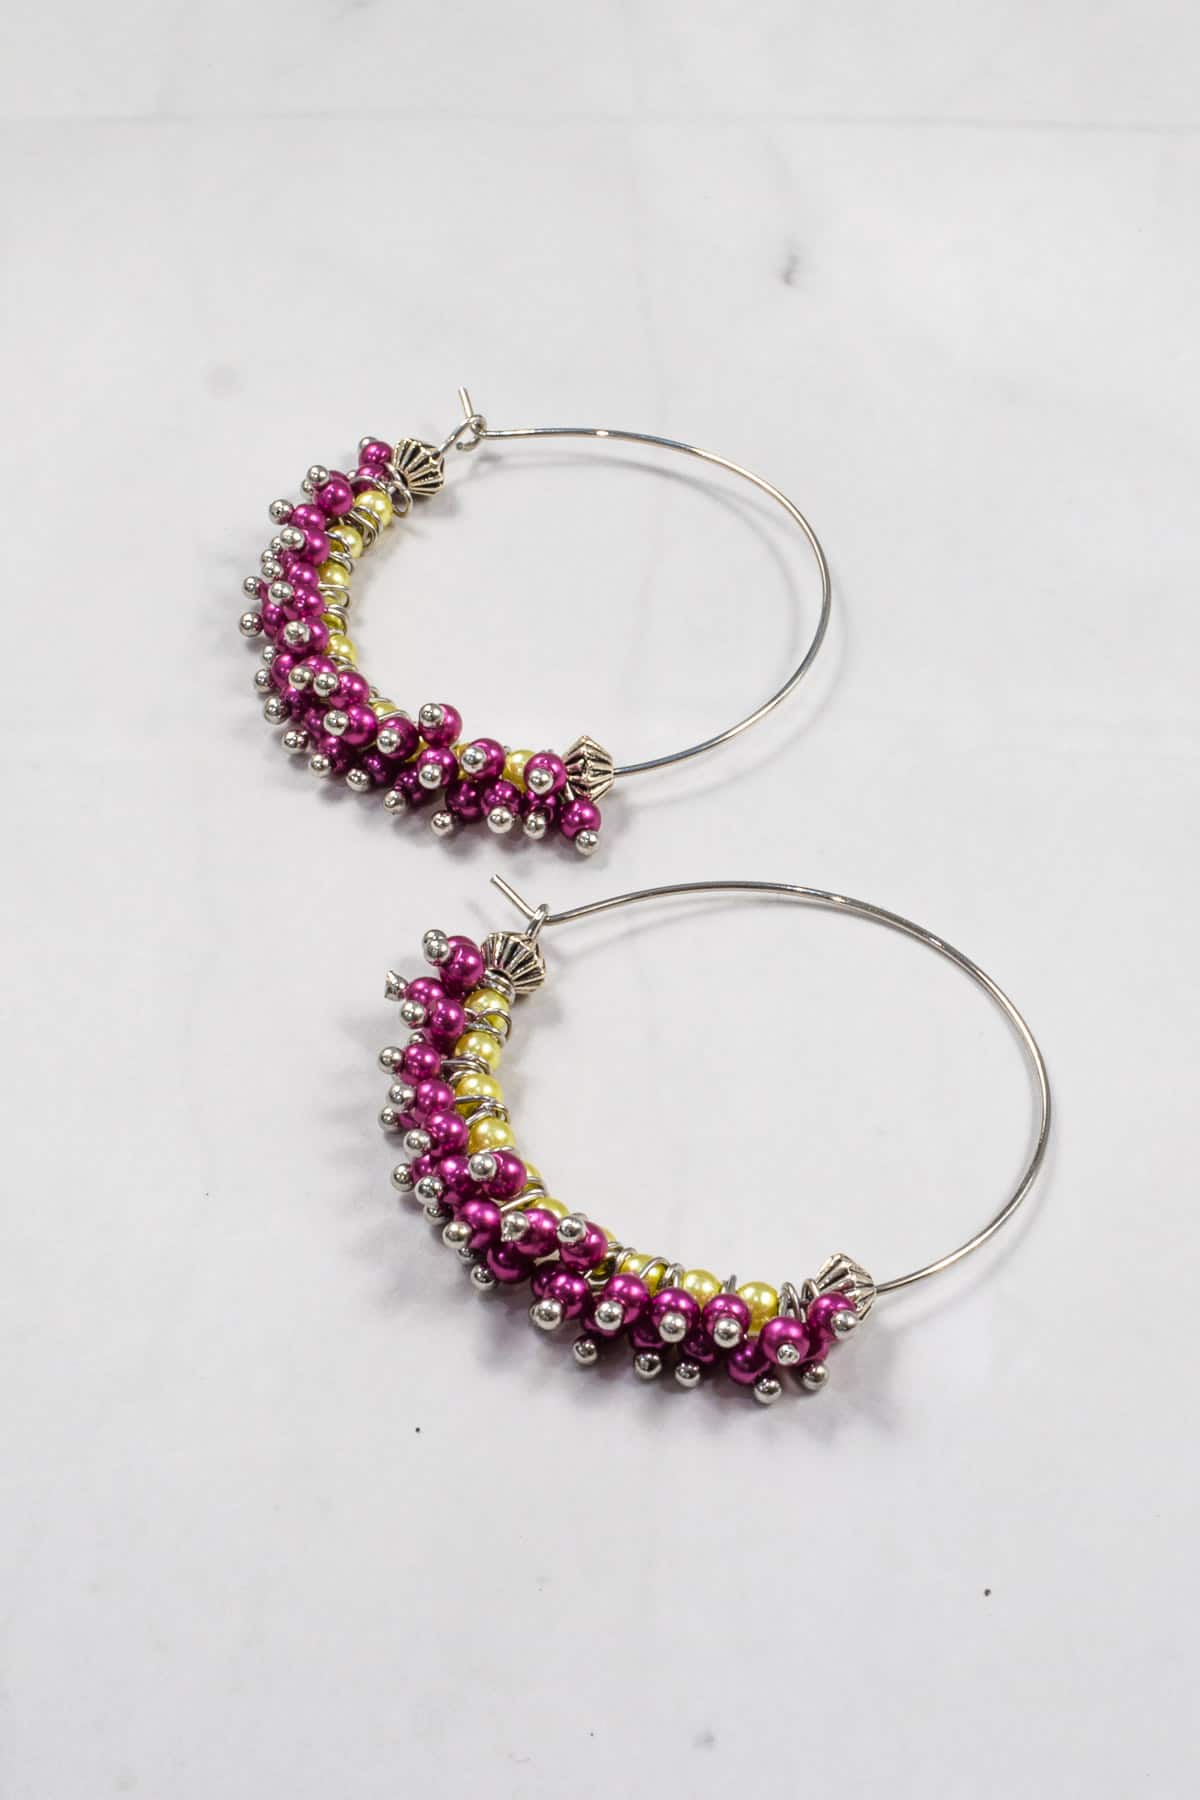 Seed bead earrings in purple and green.